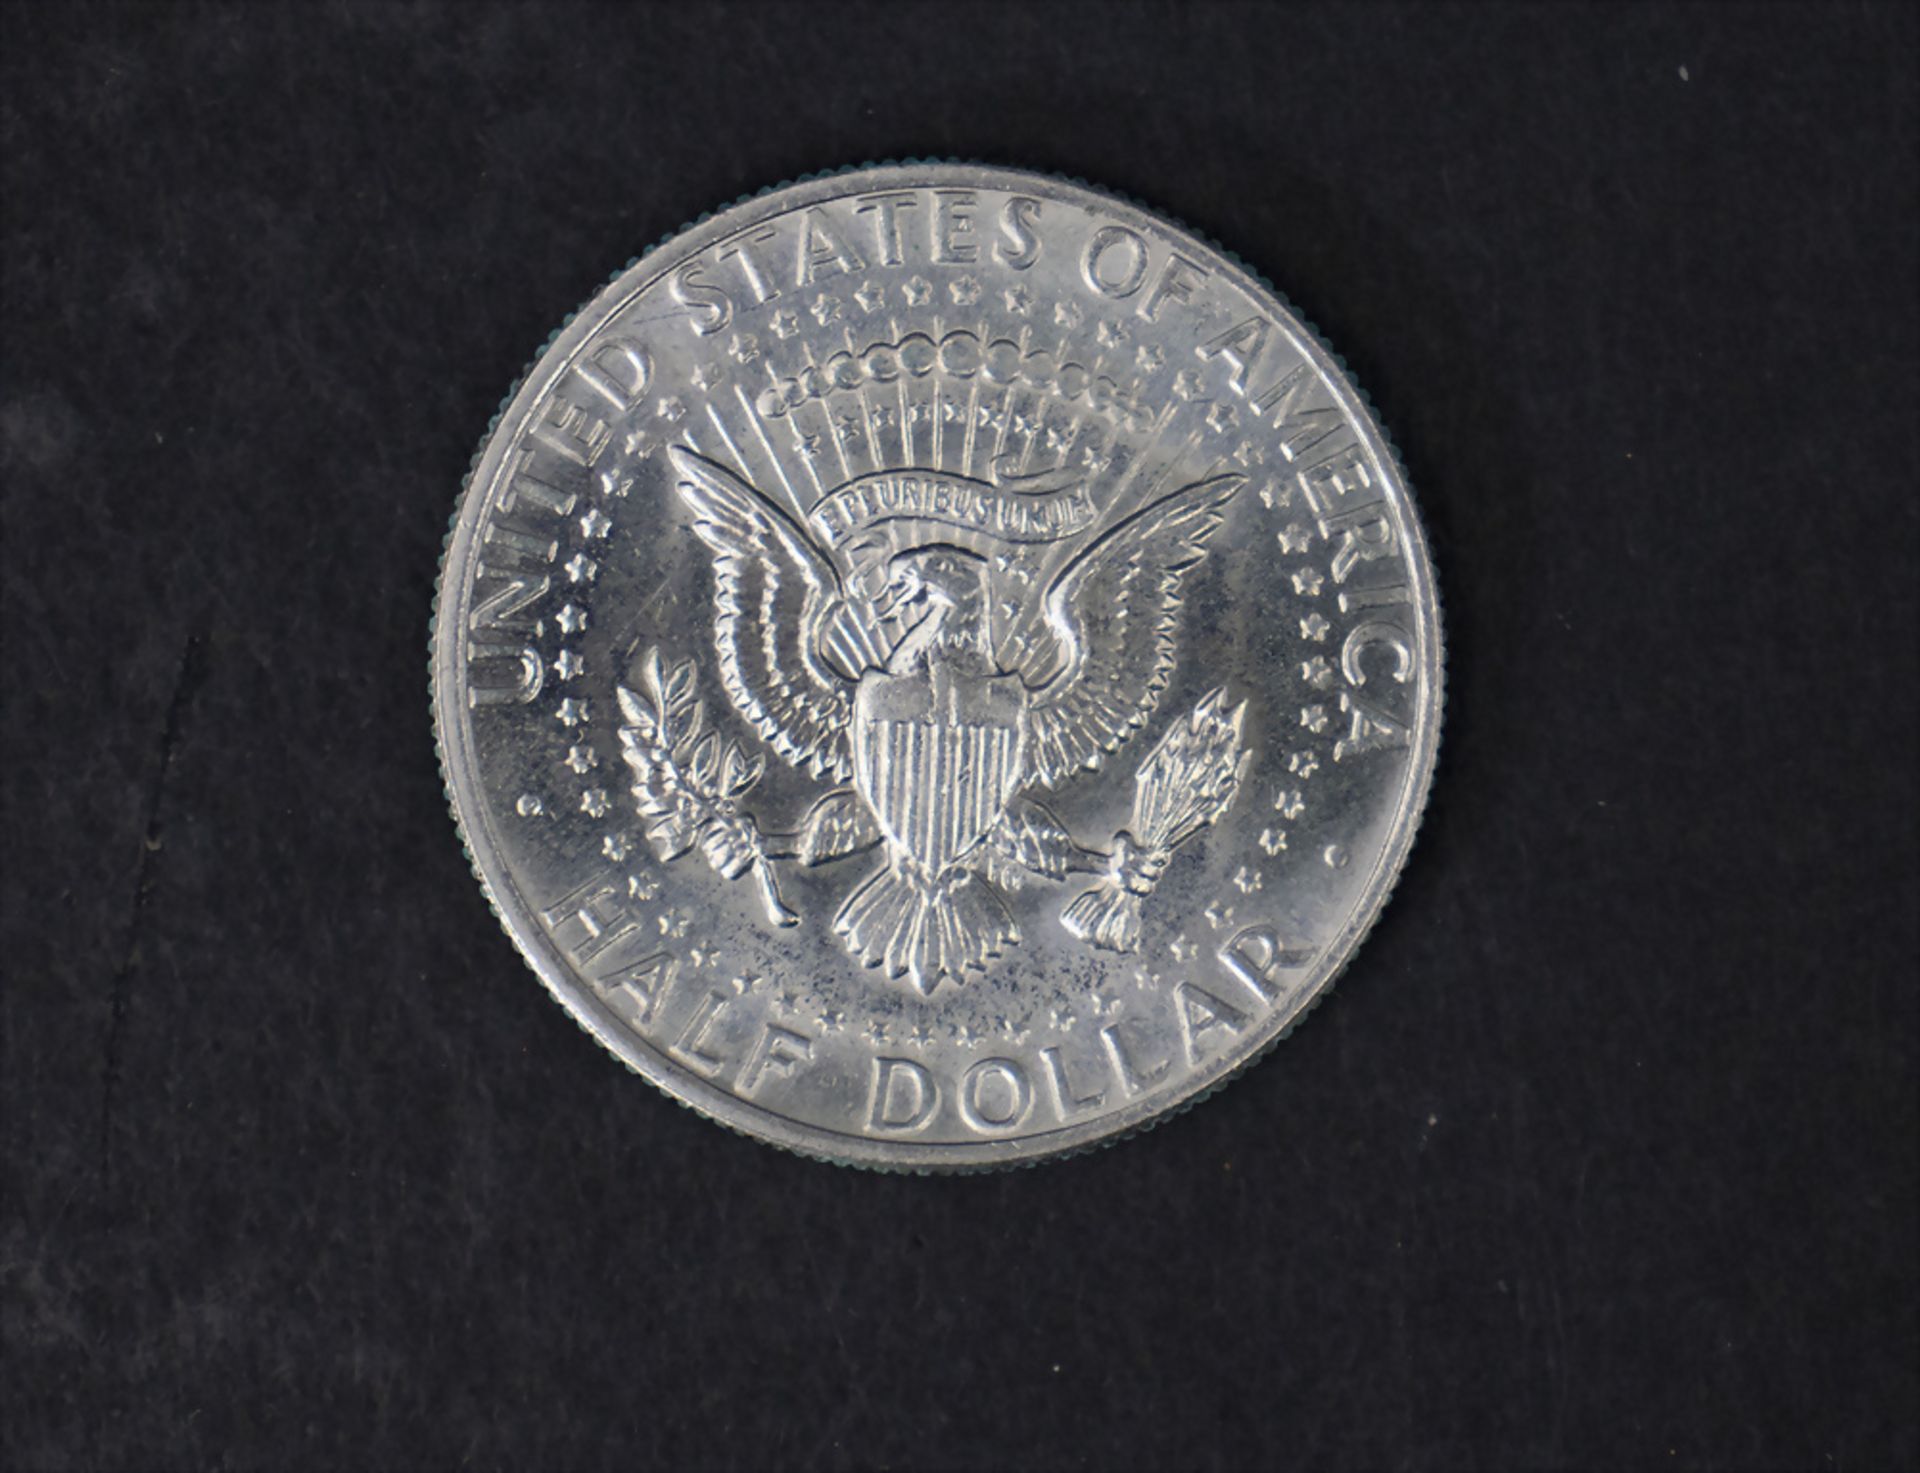 Sammlung Münzen 'USA' / A collection of US coins - Image 3 of 9